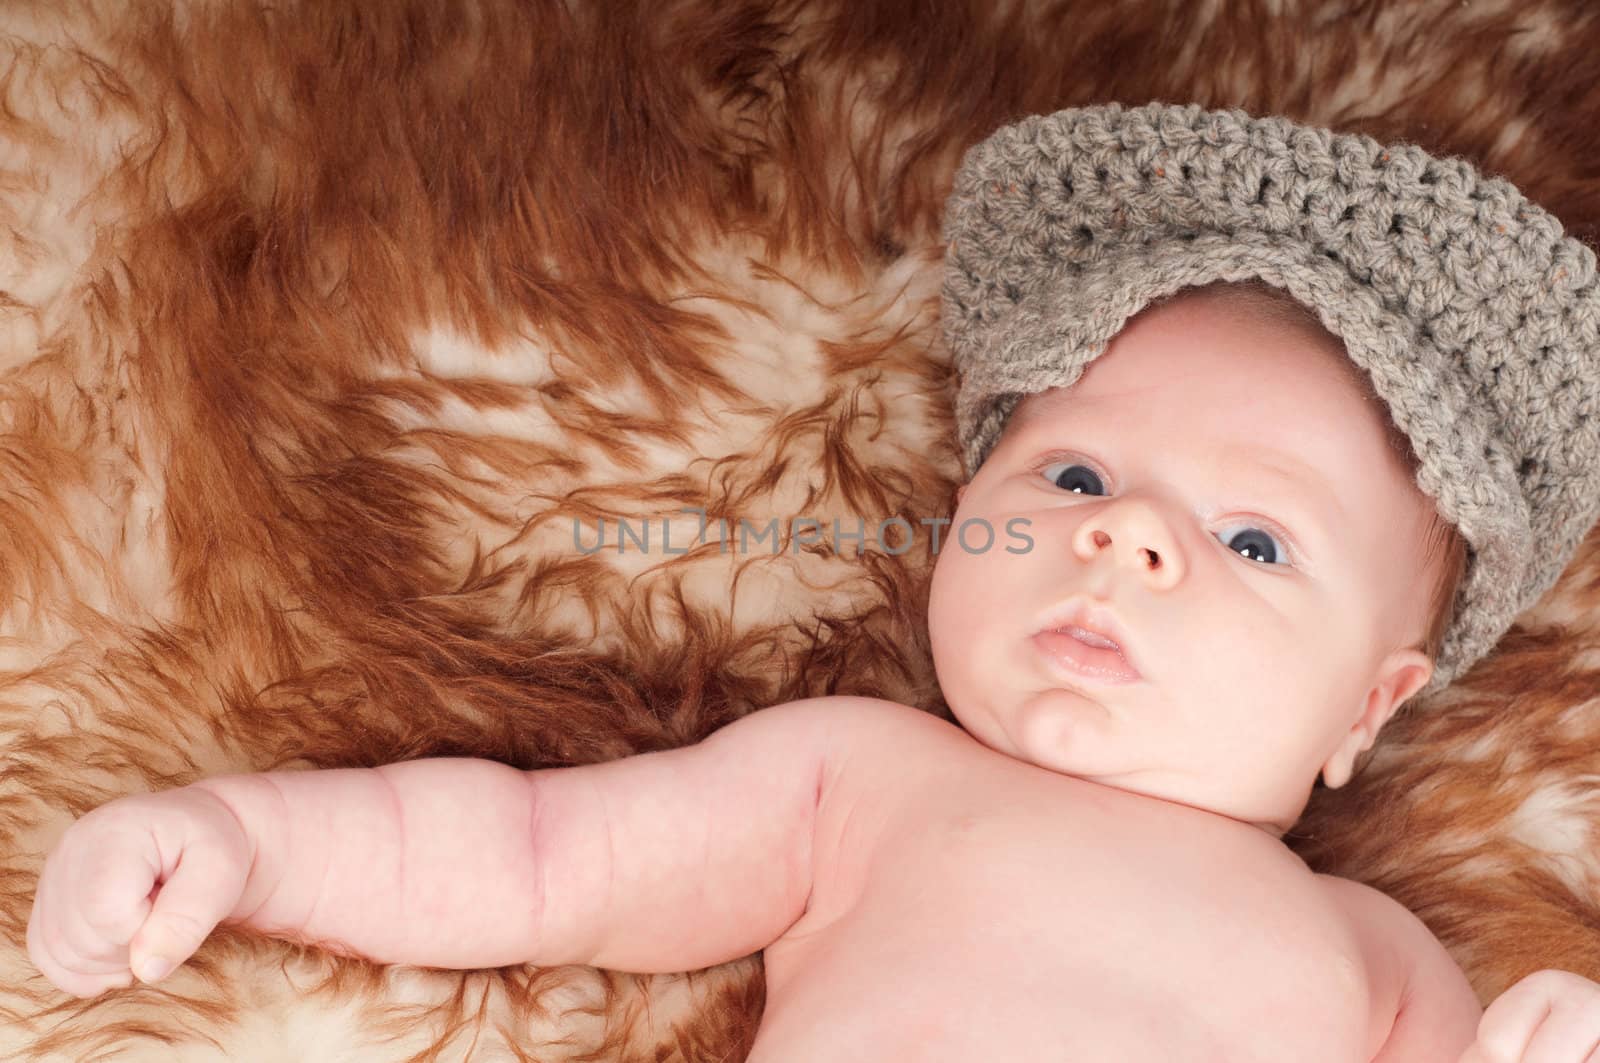 Cute newborn baby in hat lying on fur